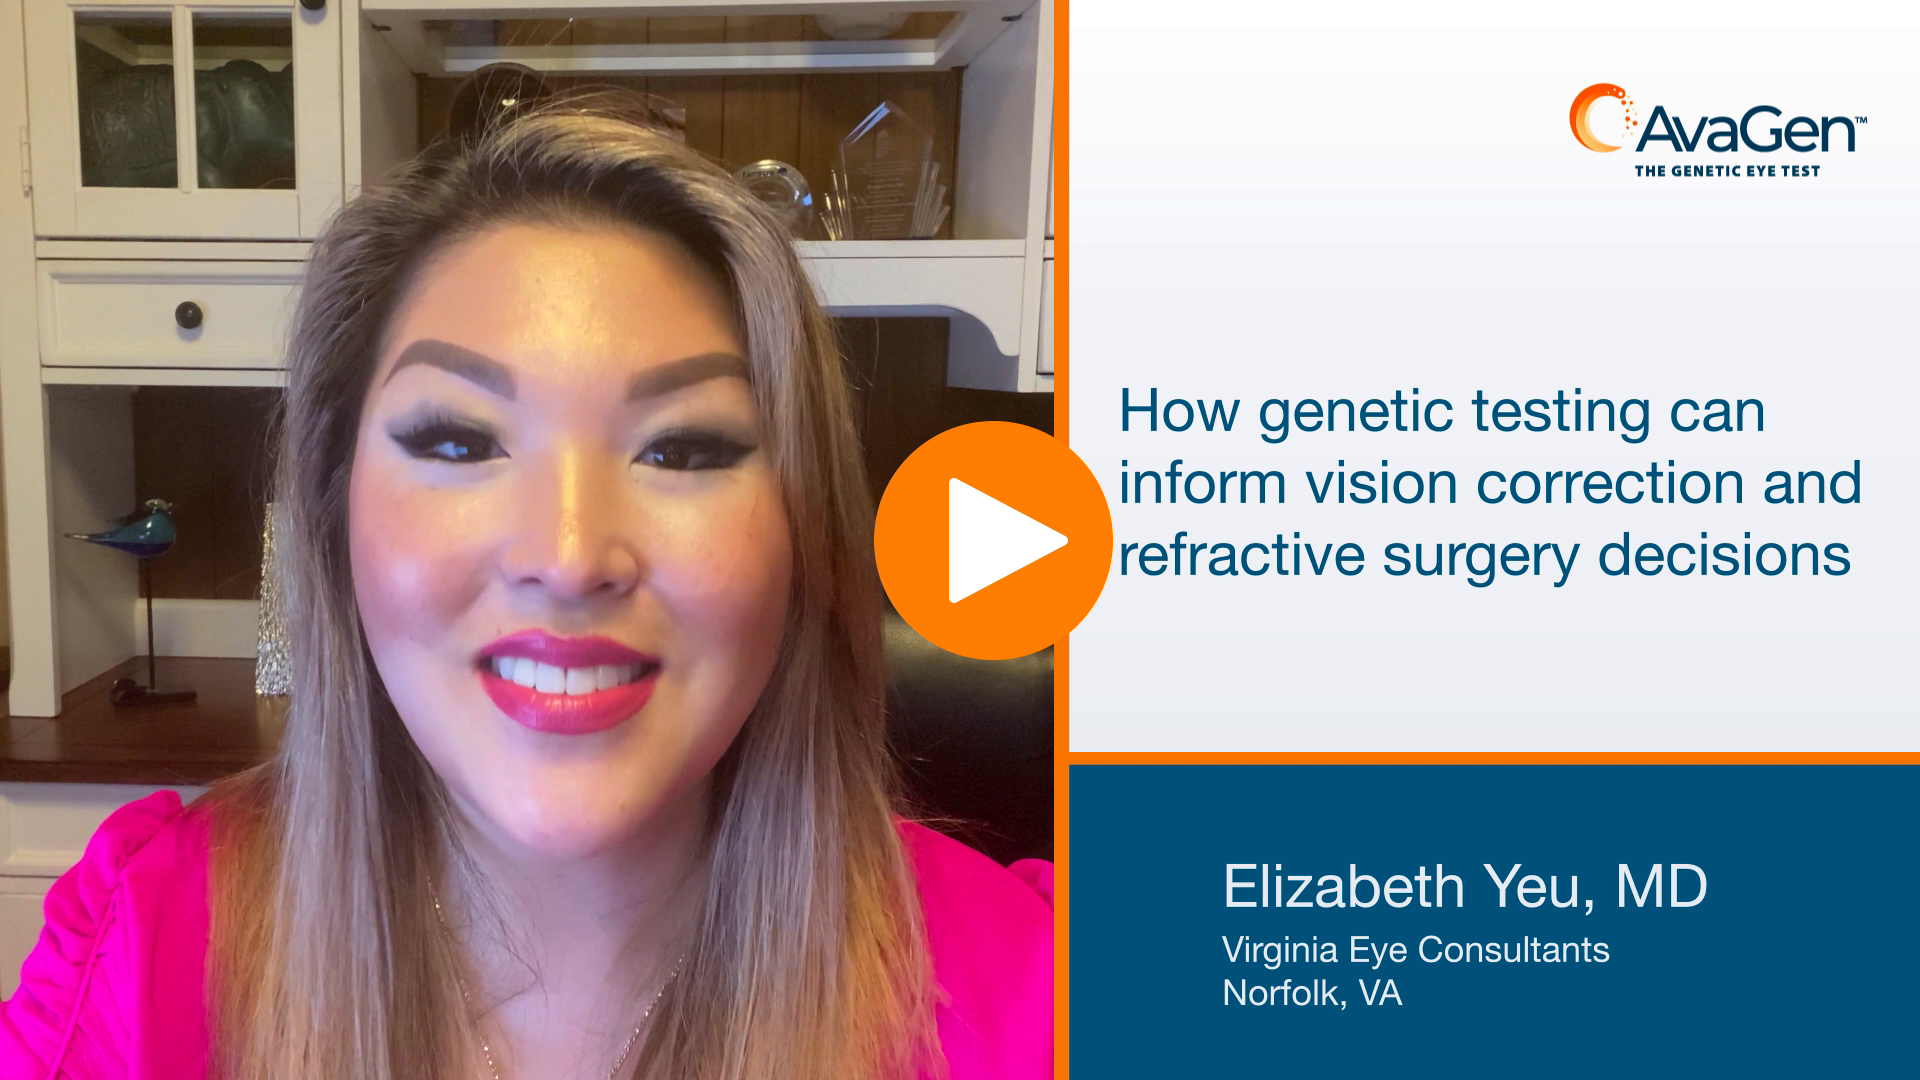 Case Study 1 - How genetics informs refractive surgery decisions